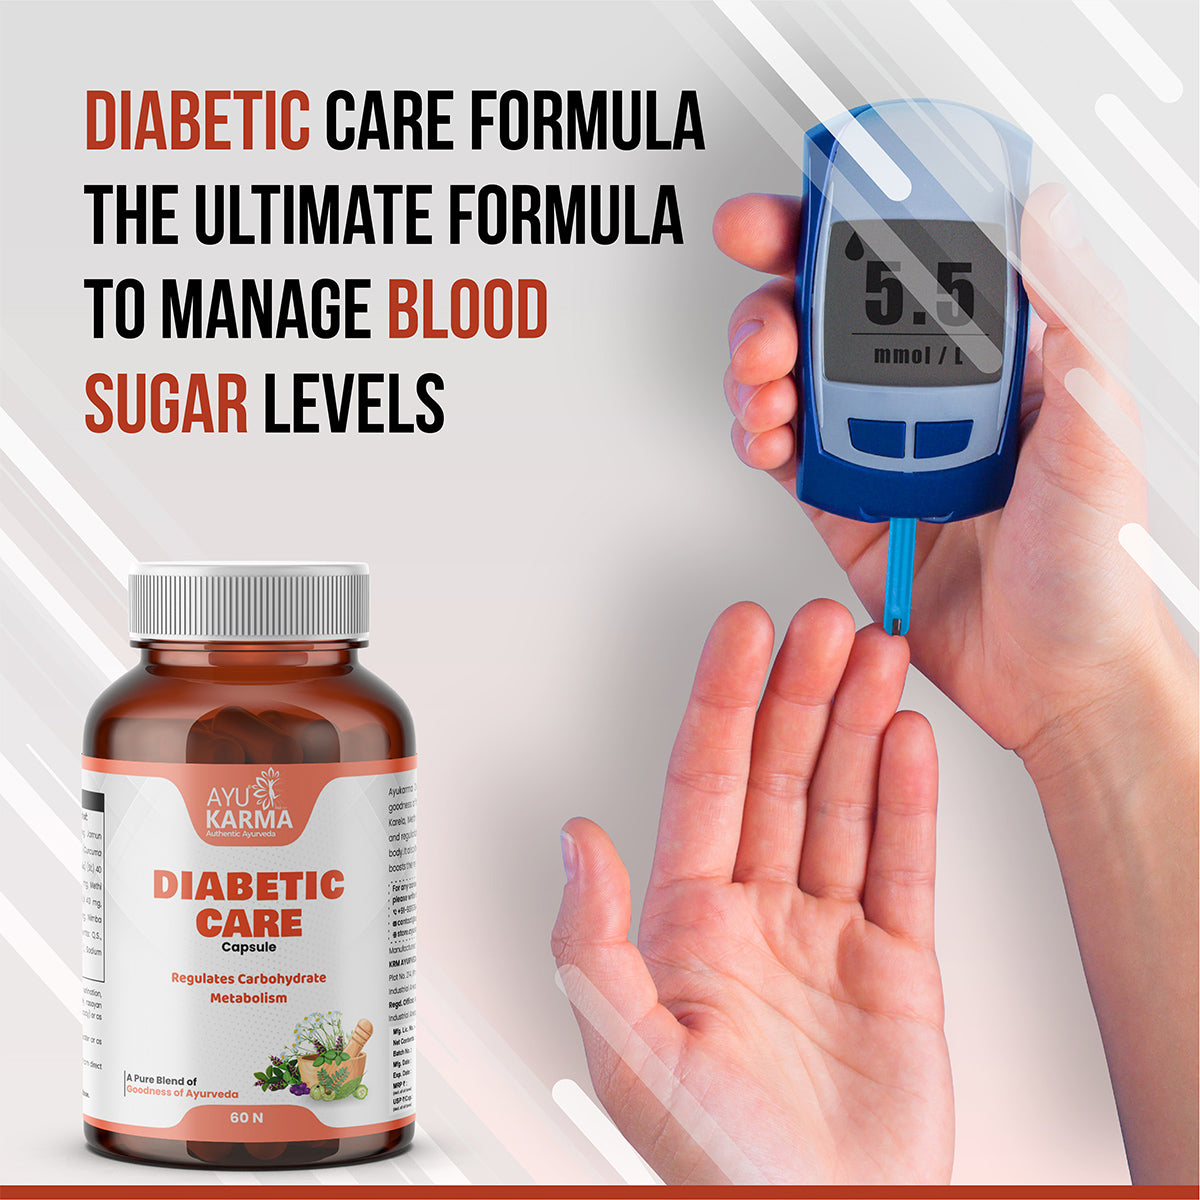 Diabetic Care Capsule - Combo Pack